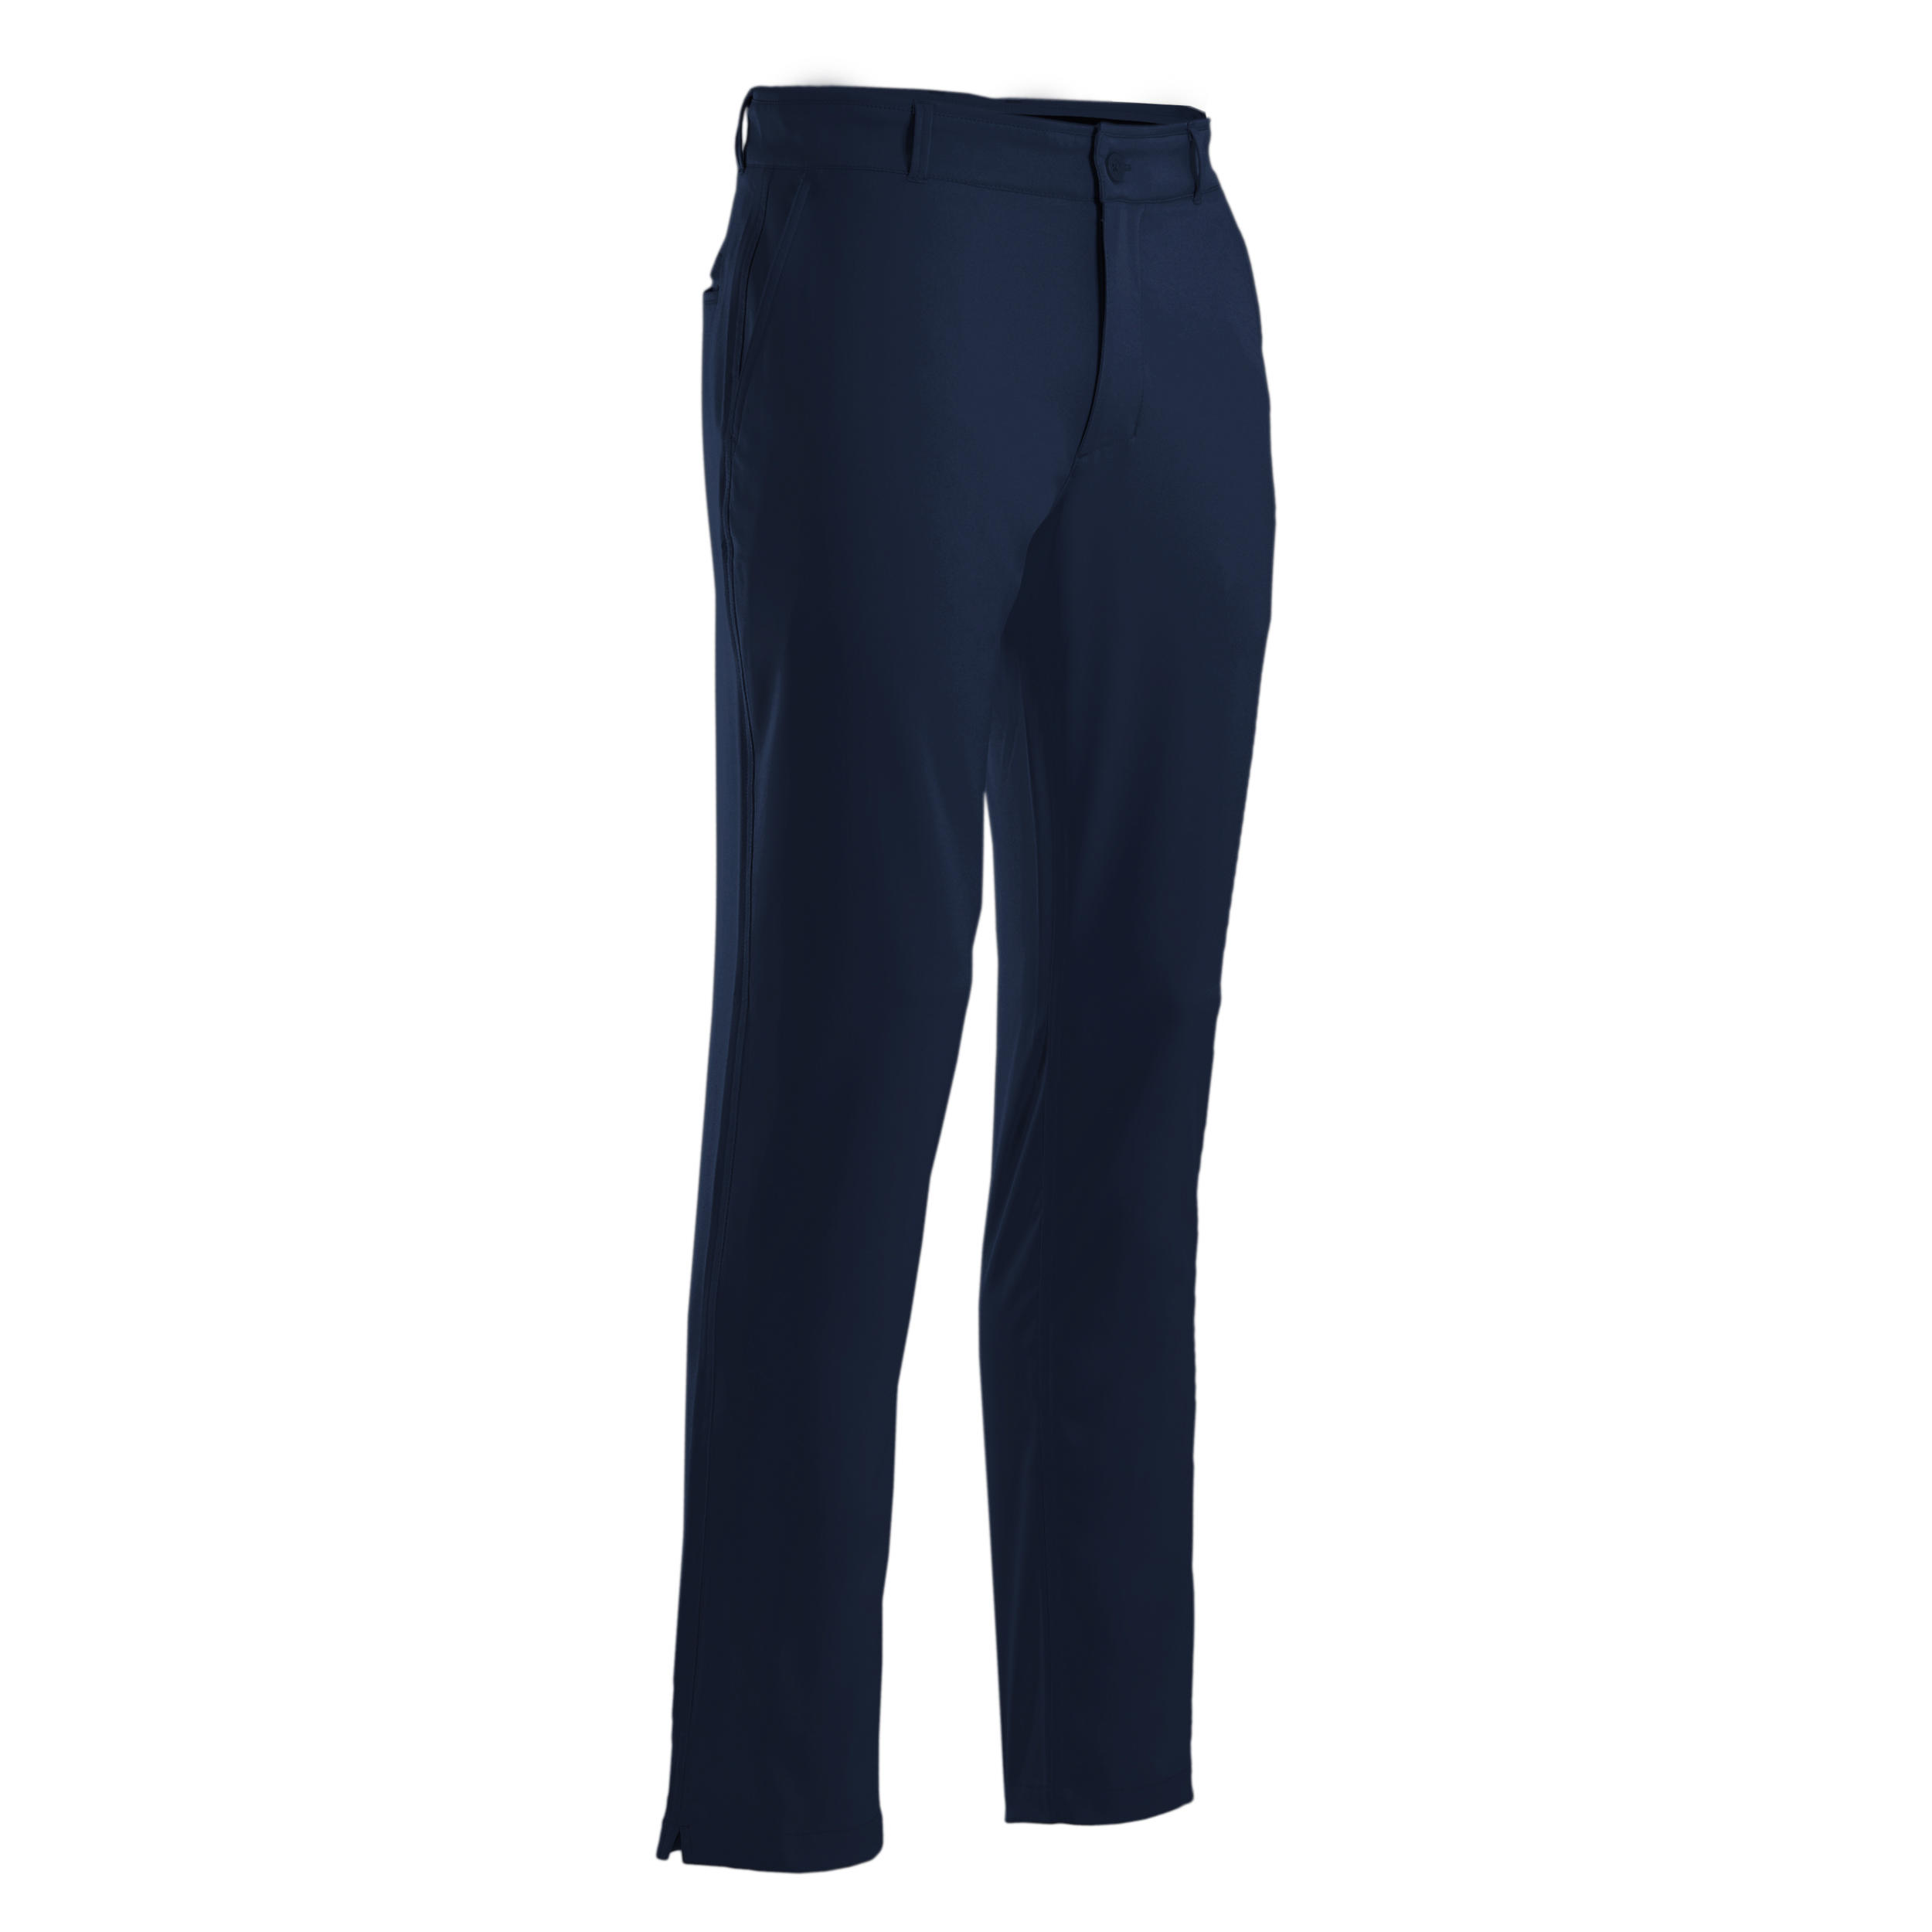 Men's golf trousers - WW500 navy blue 6/6